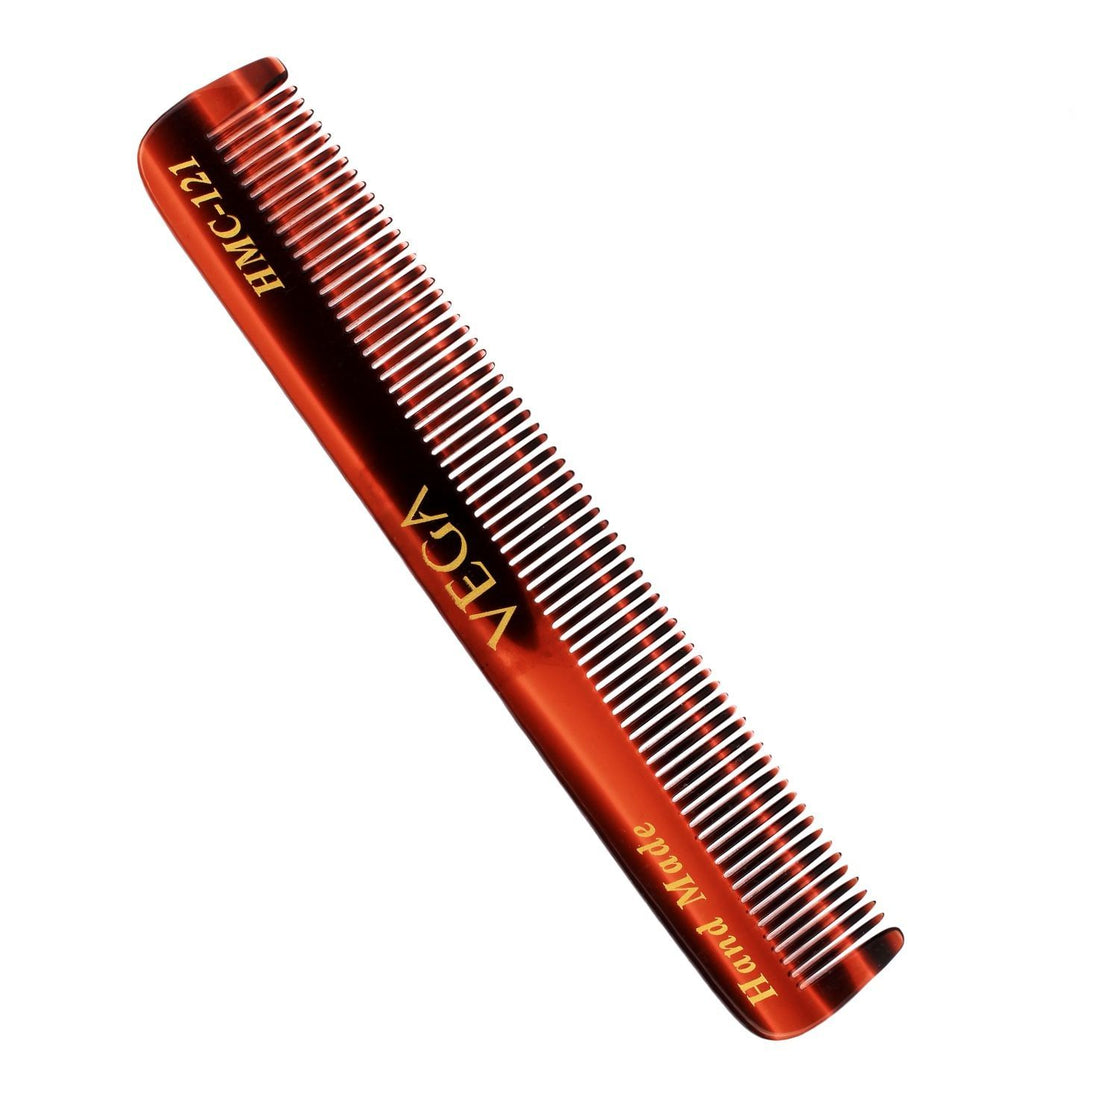 Vega Handcrafted Comb (Hmc-121)